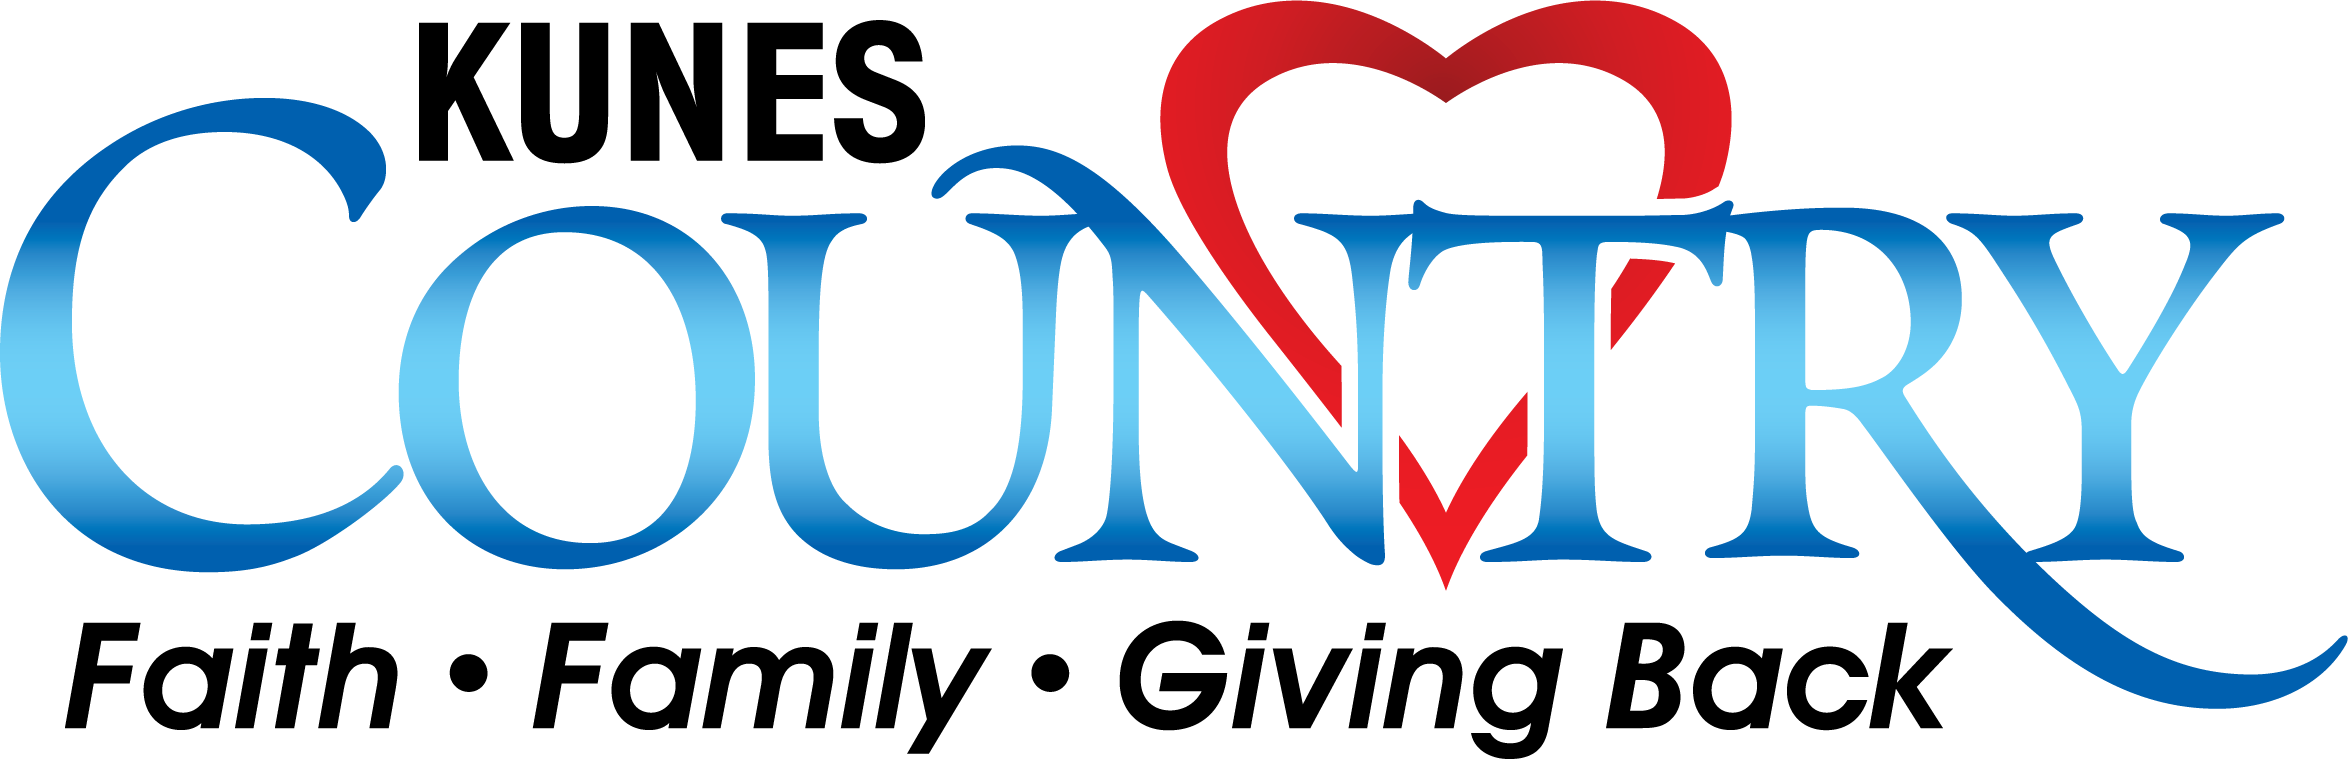 KUNES logo